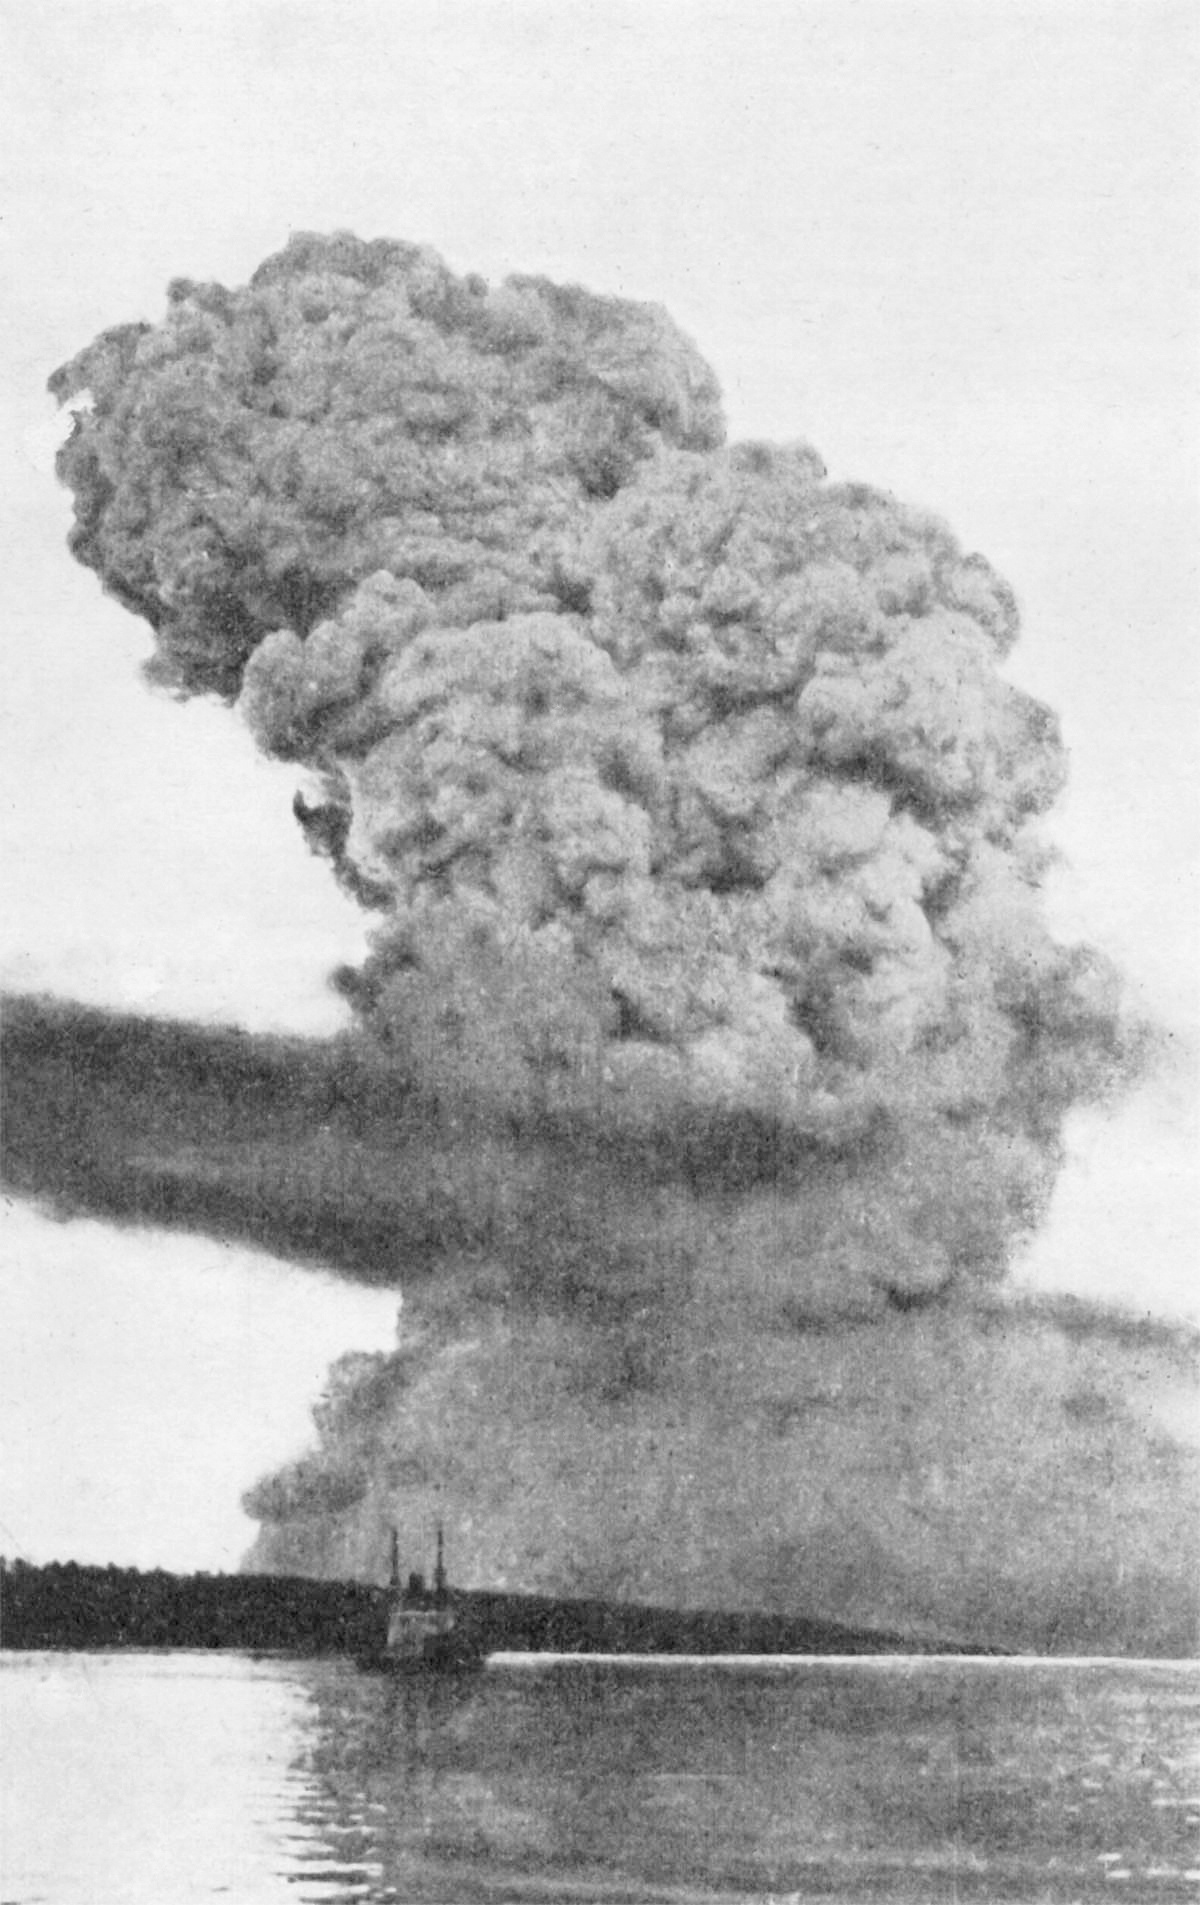 Halifax explosion, 2